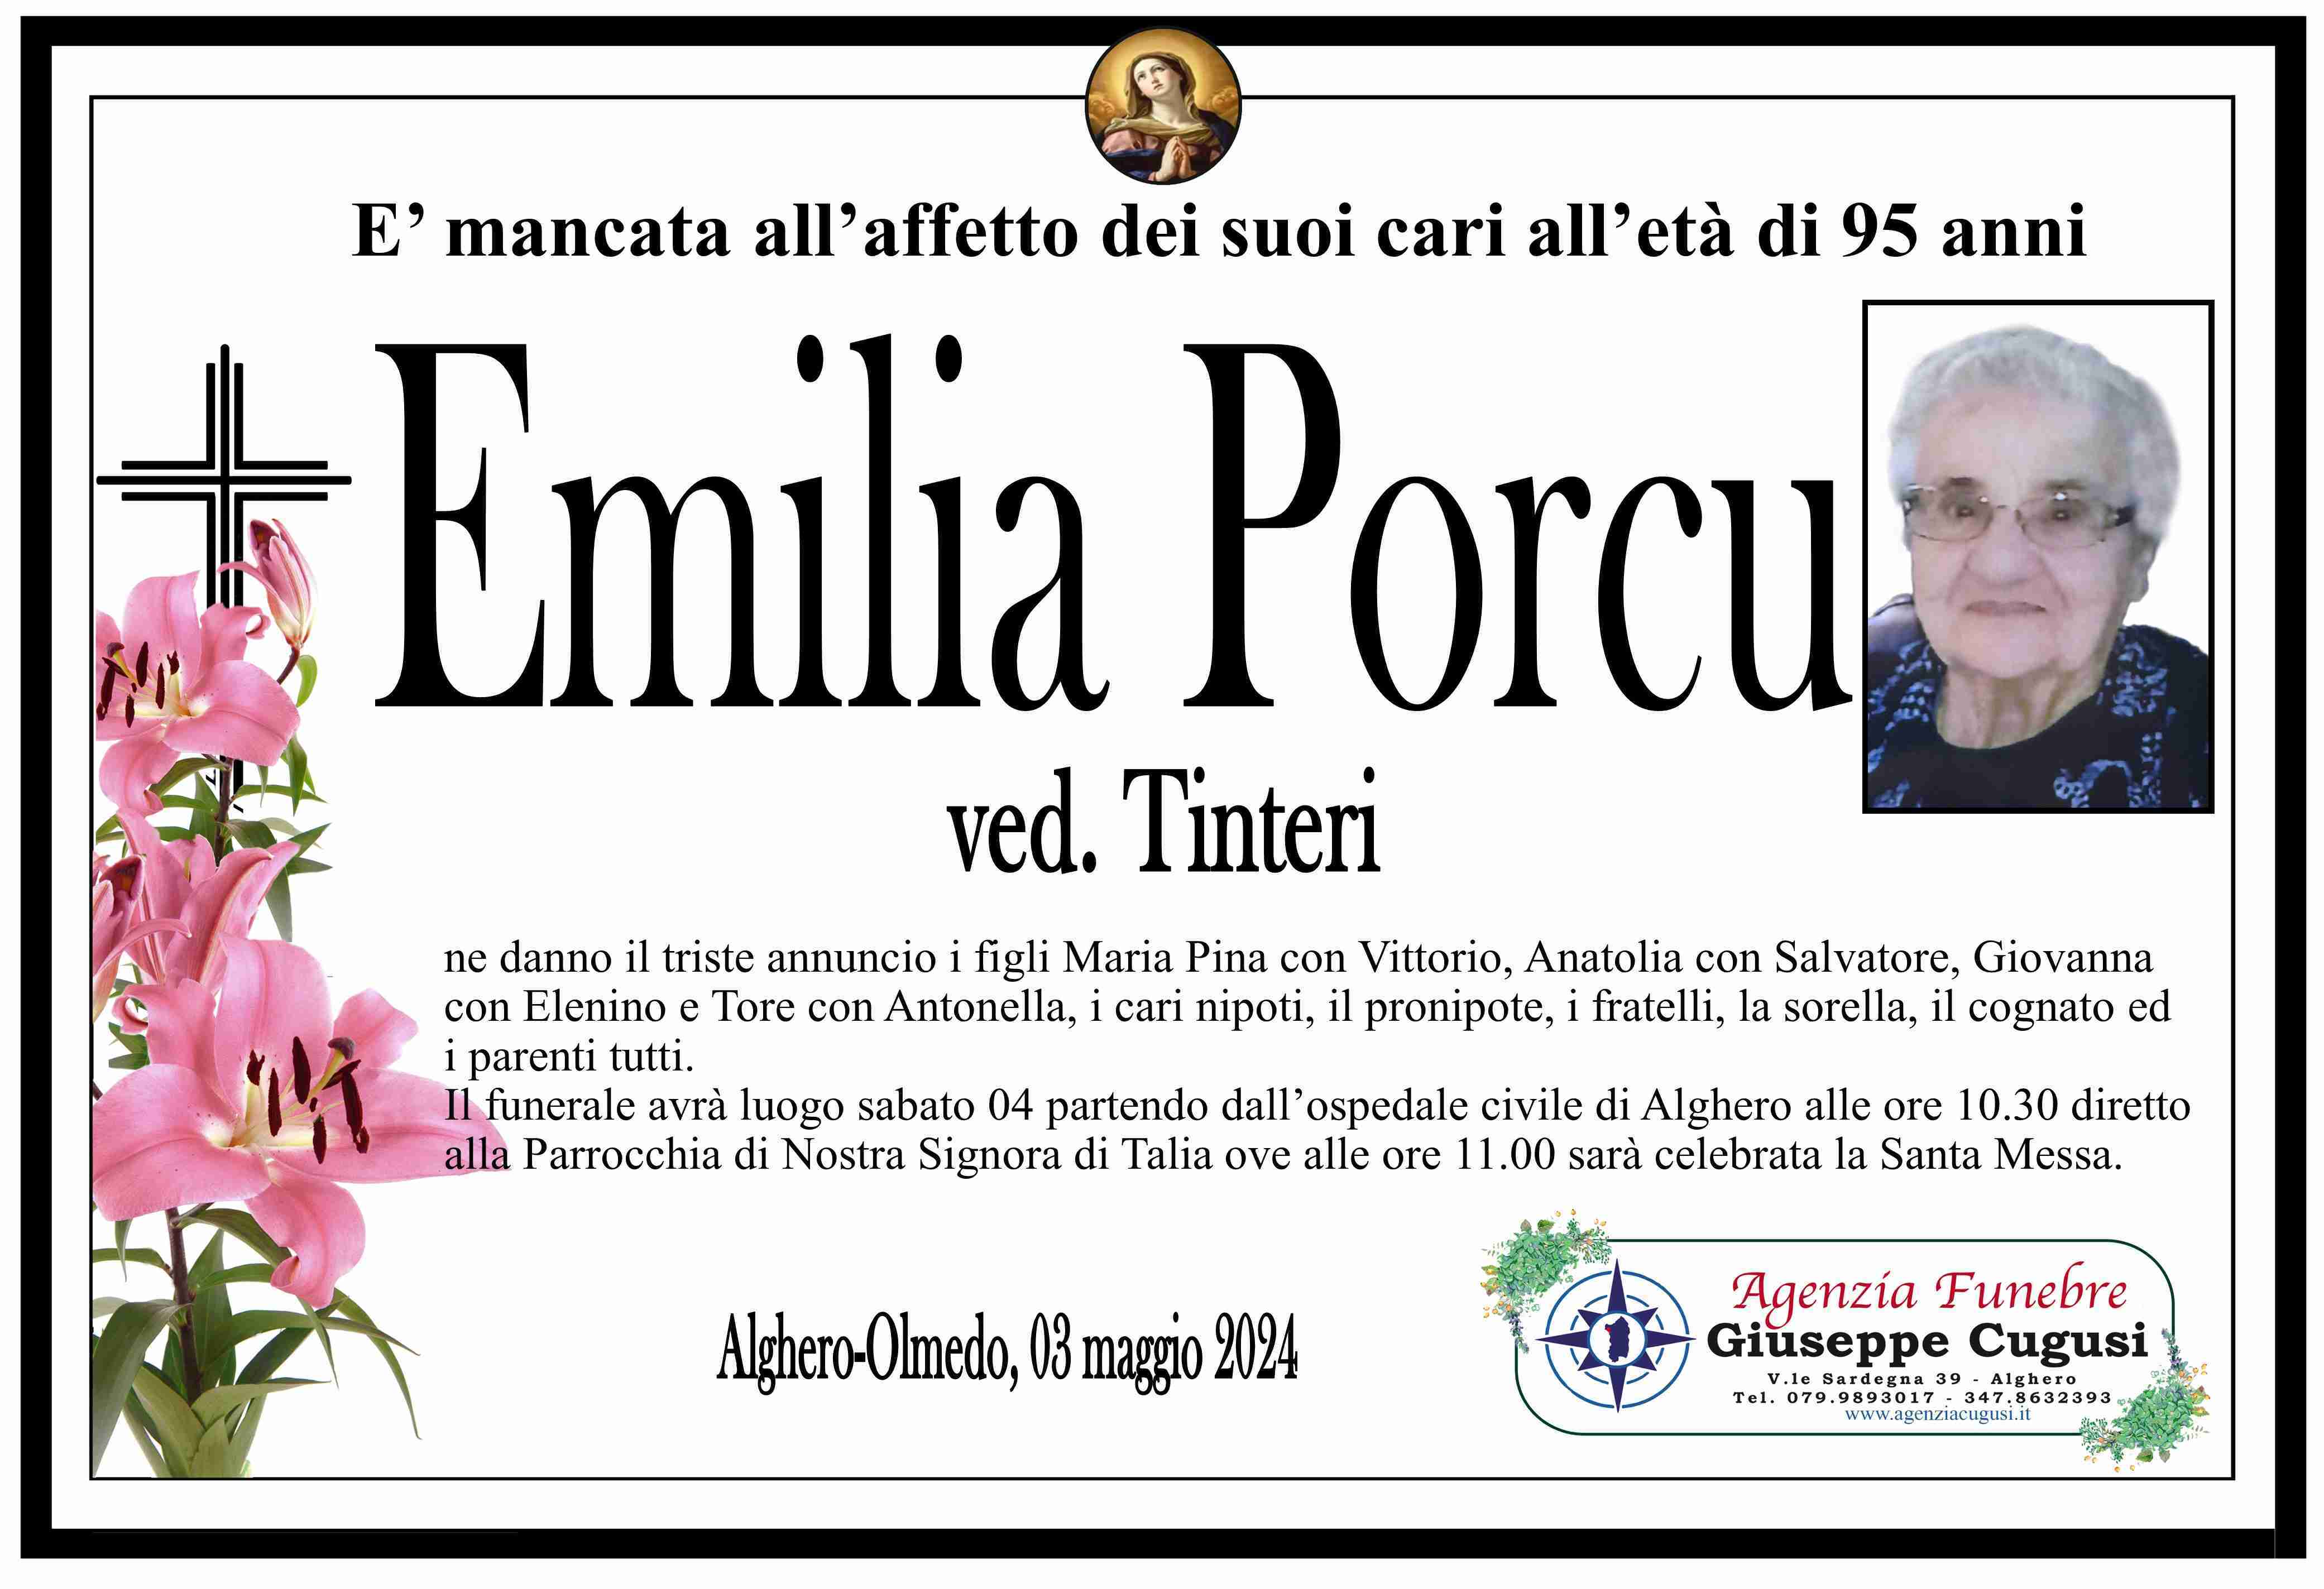 Emilia Porcu